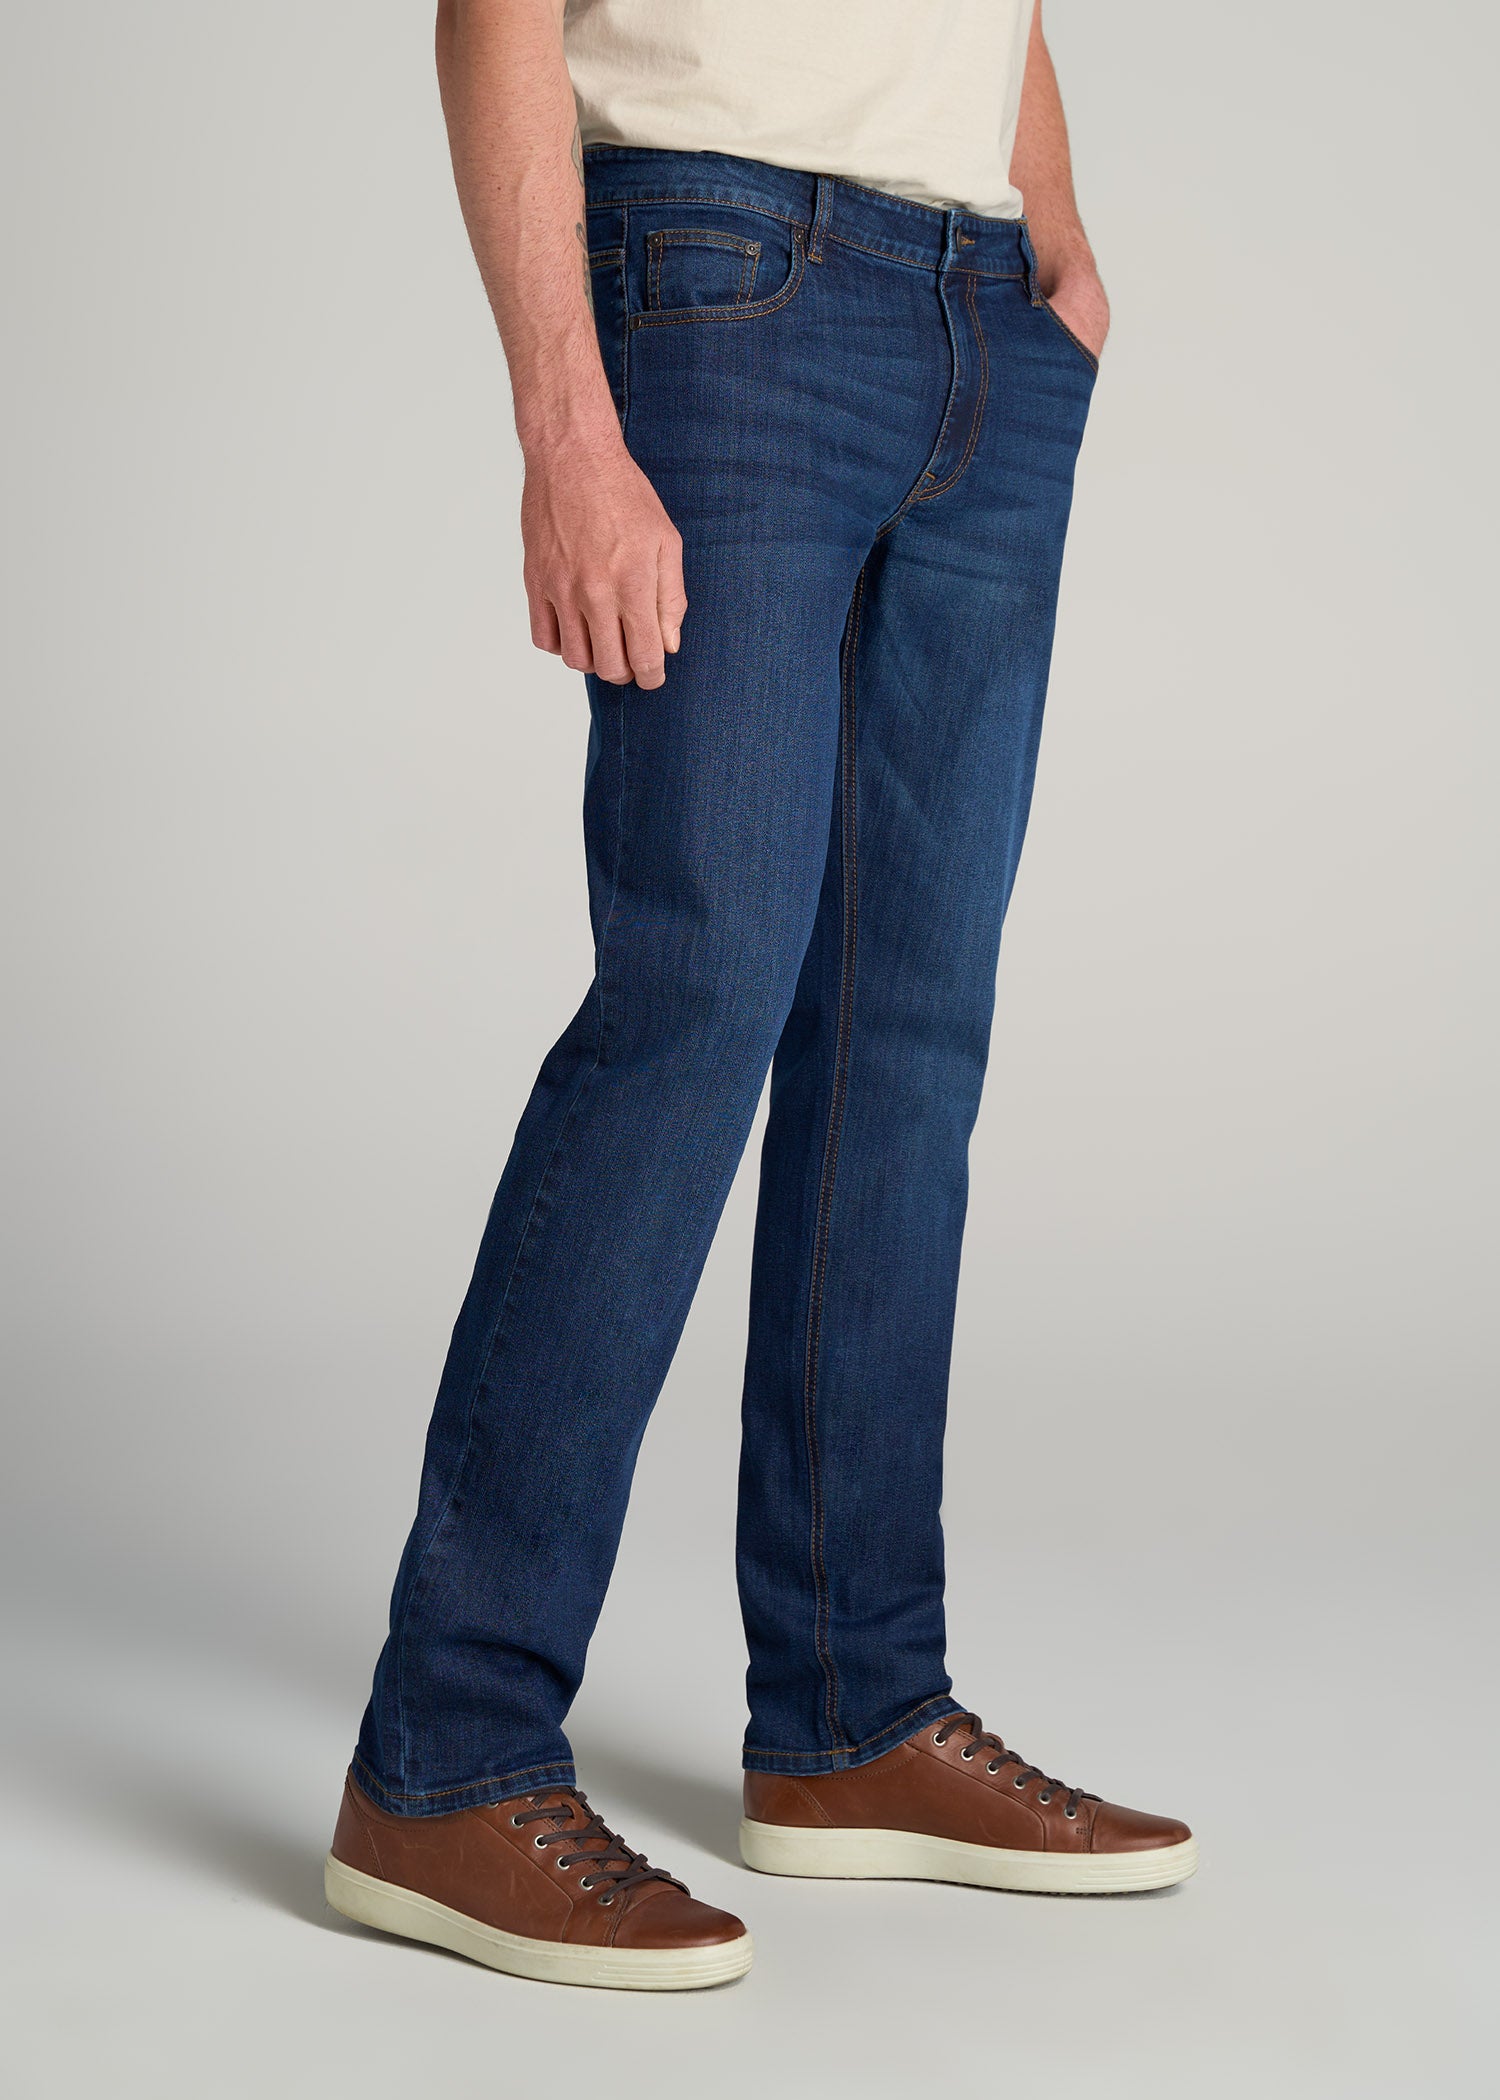 Men\'s Slim Taper Jeans: Slim Tall Taper Charger Jeans American Fit – Carman Blue